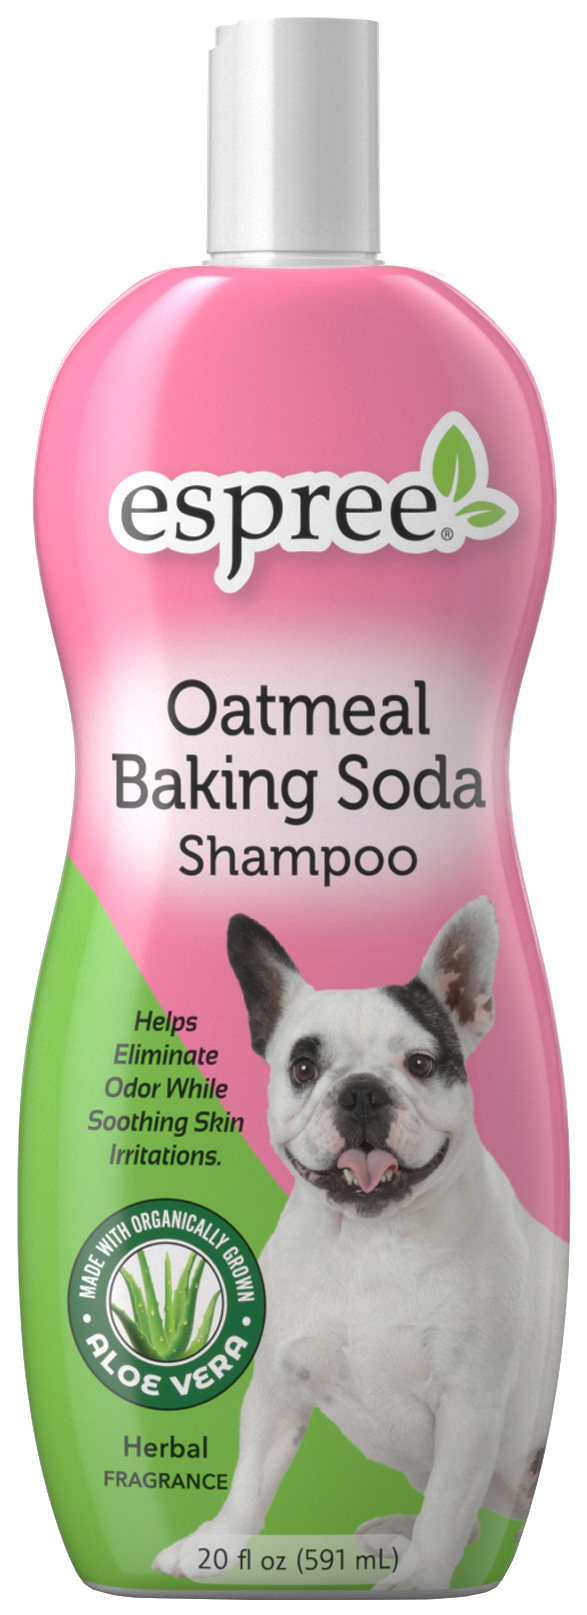 фото Шампунь овес и сода, для собак, oatmeal baking soda shampoo, 591мл espree